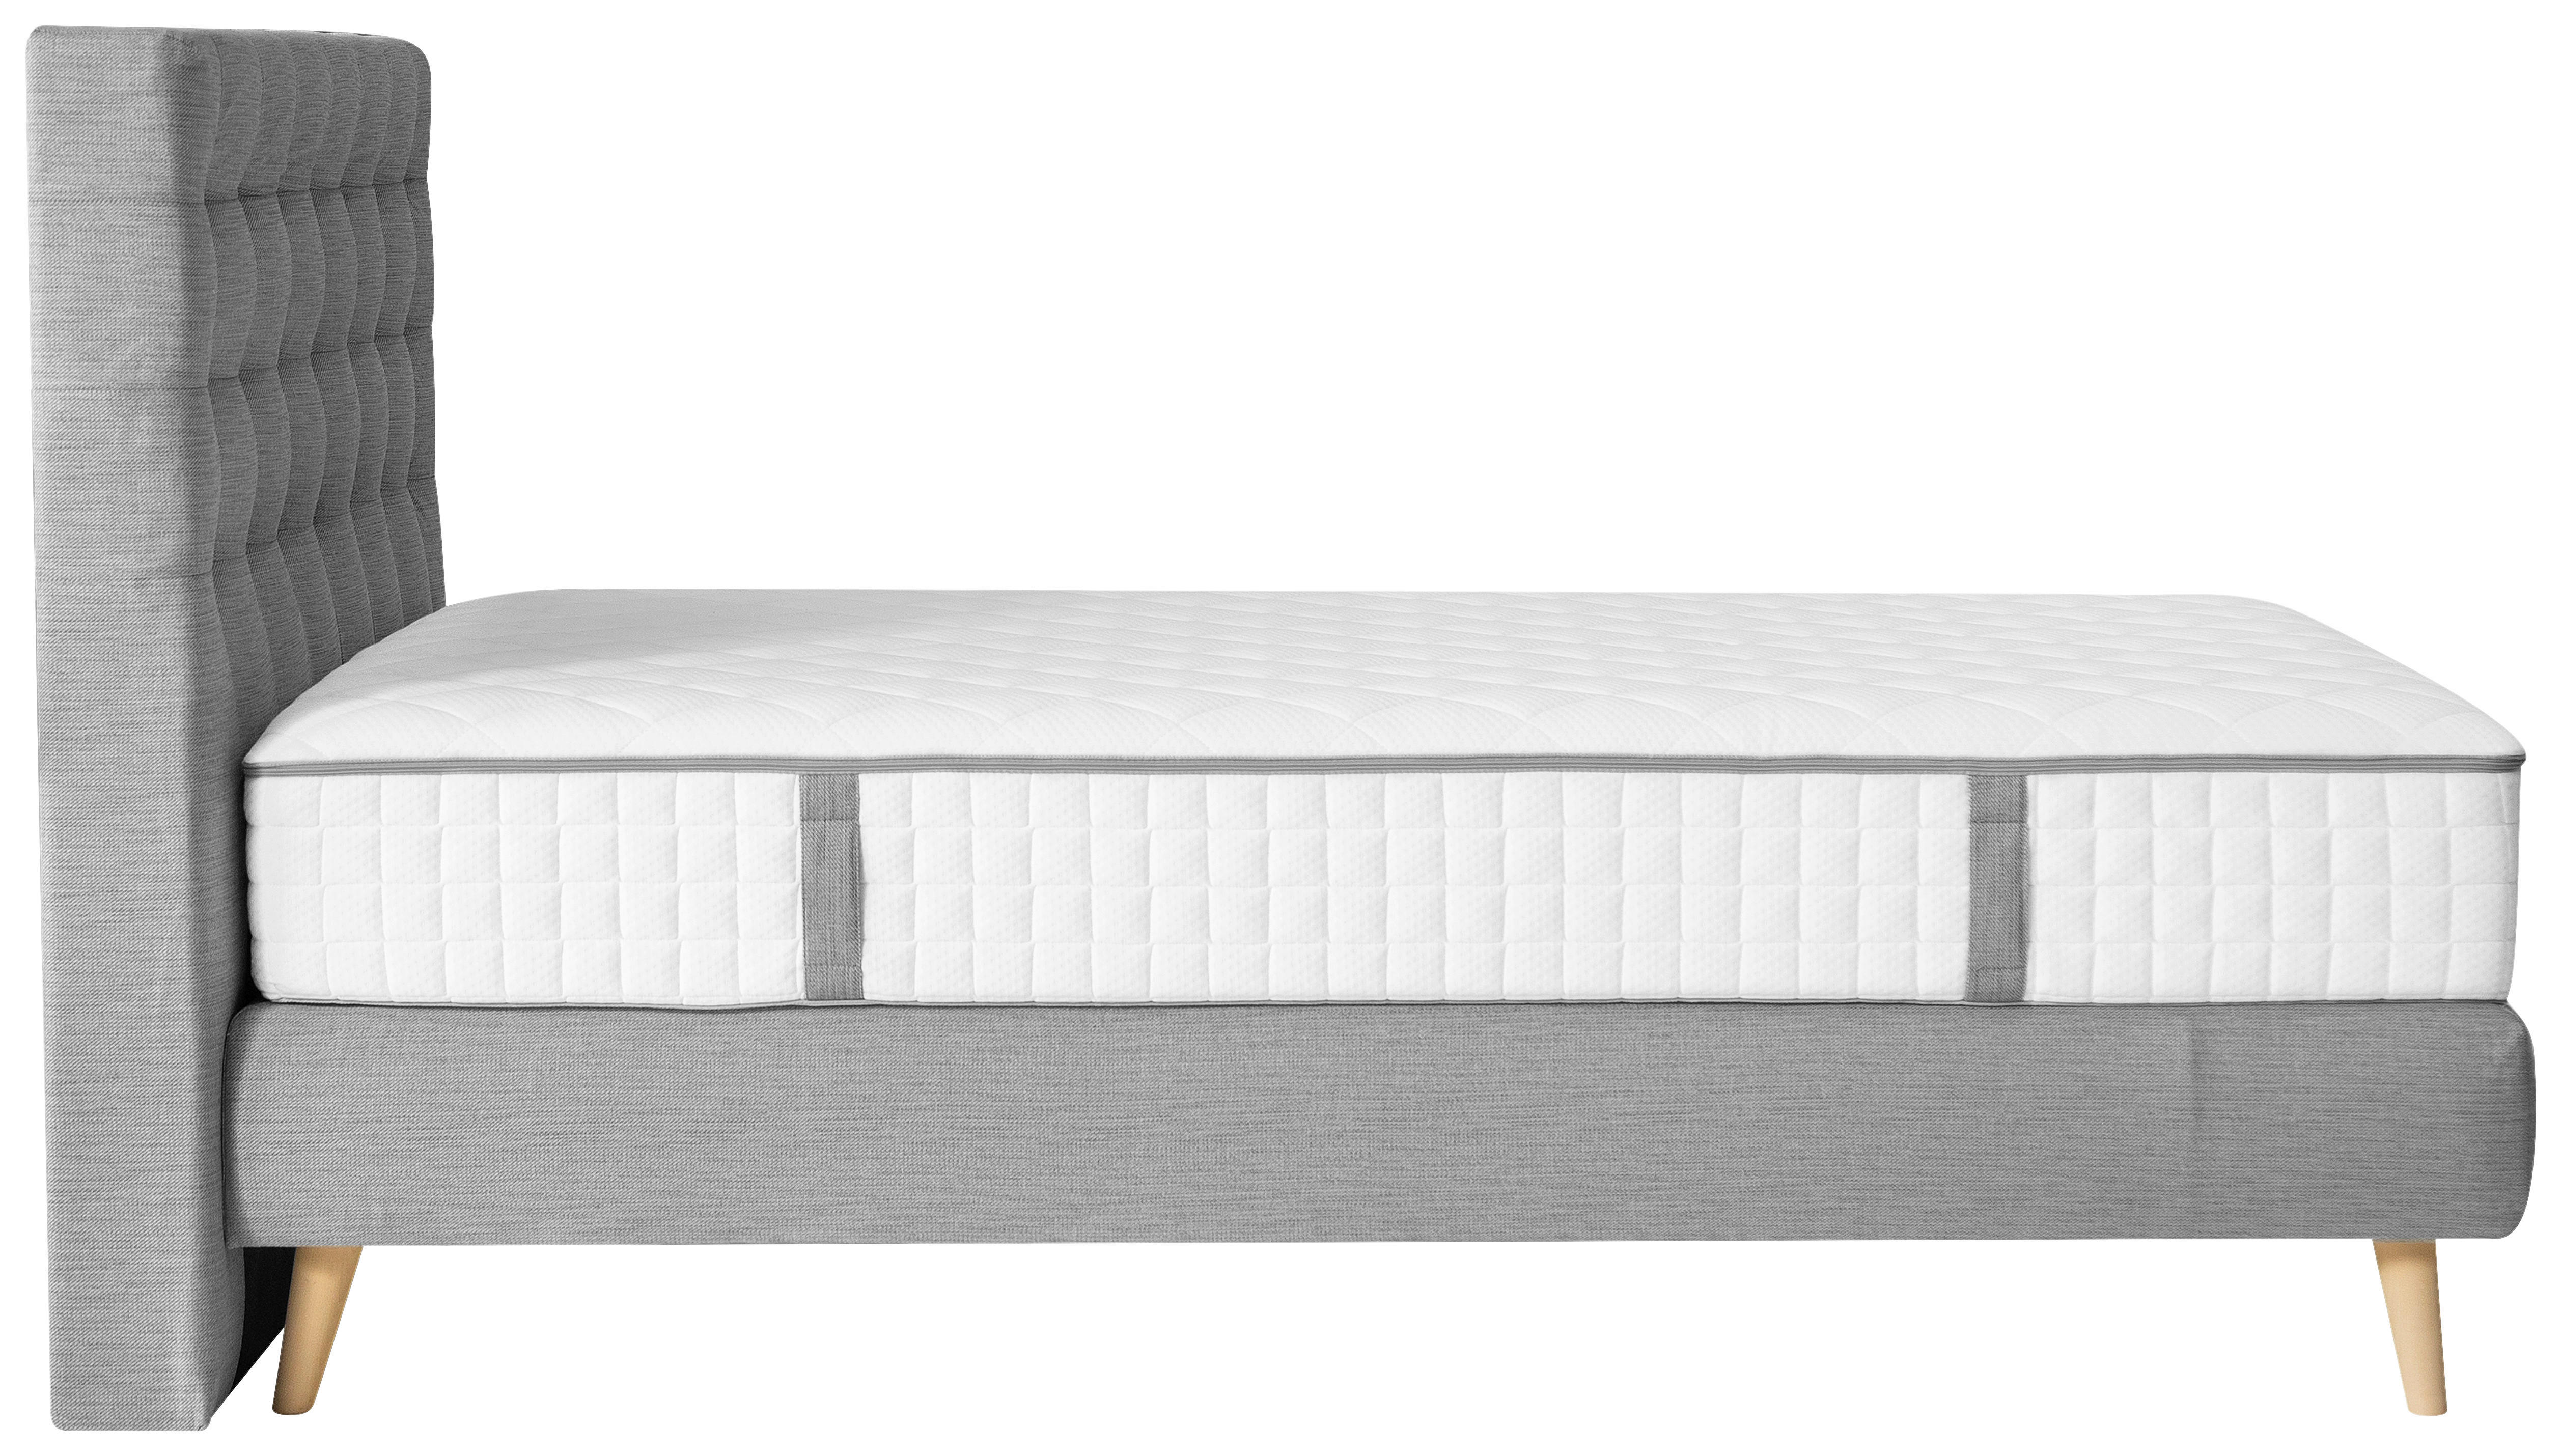 BOXSPRINGBETT 160/200 cm  in Hellgrau  - Hellgrau, Design, Holz/Textil (160/200cm) - Carryhome